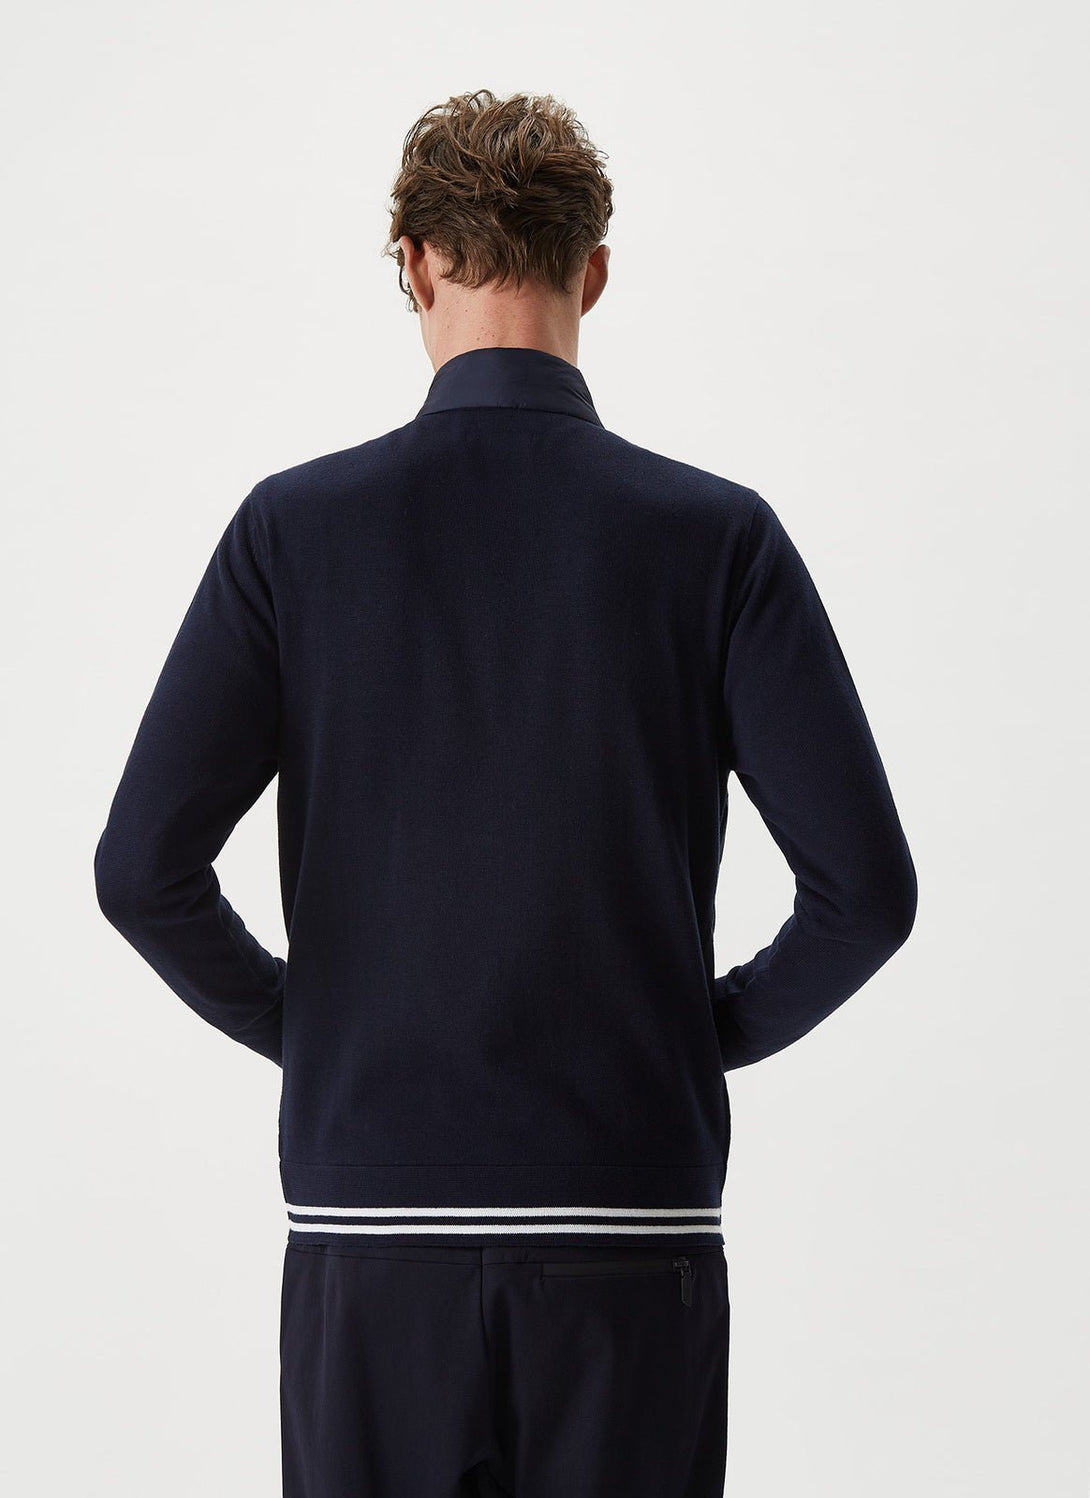 Men Jersey | Navy Blue Cardigan With Nylon Front by Spanish designer Adolfo Dominguez